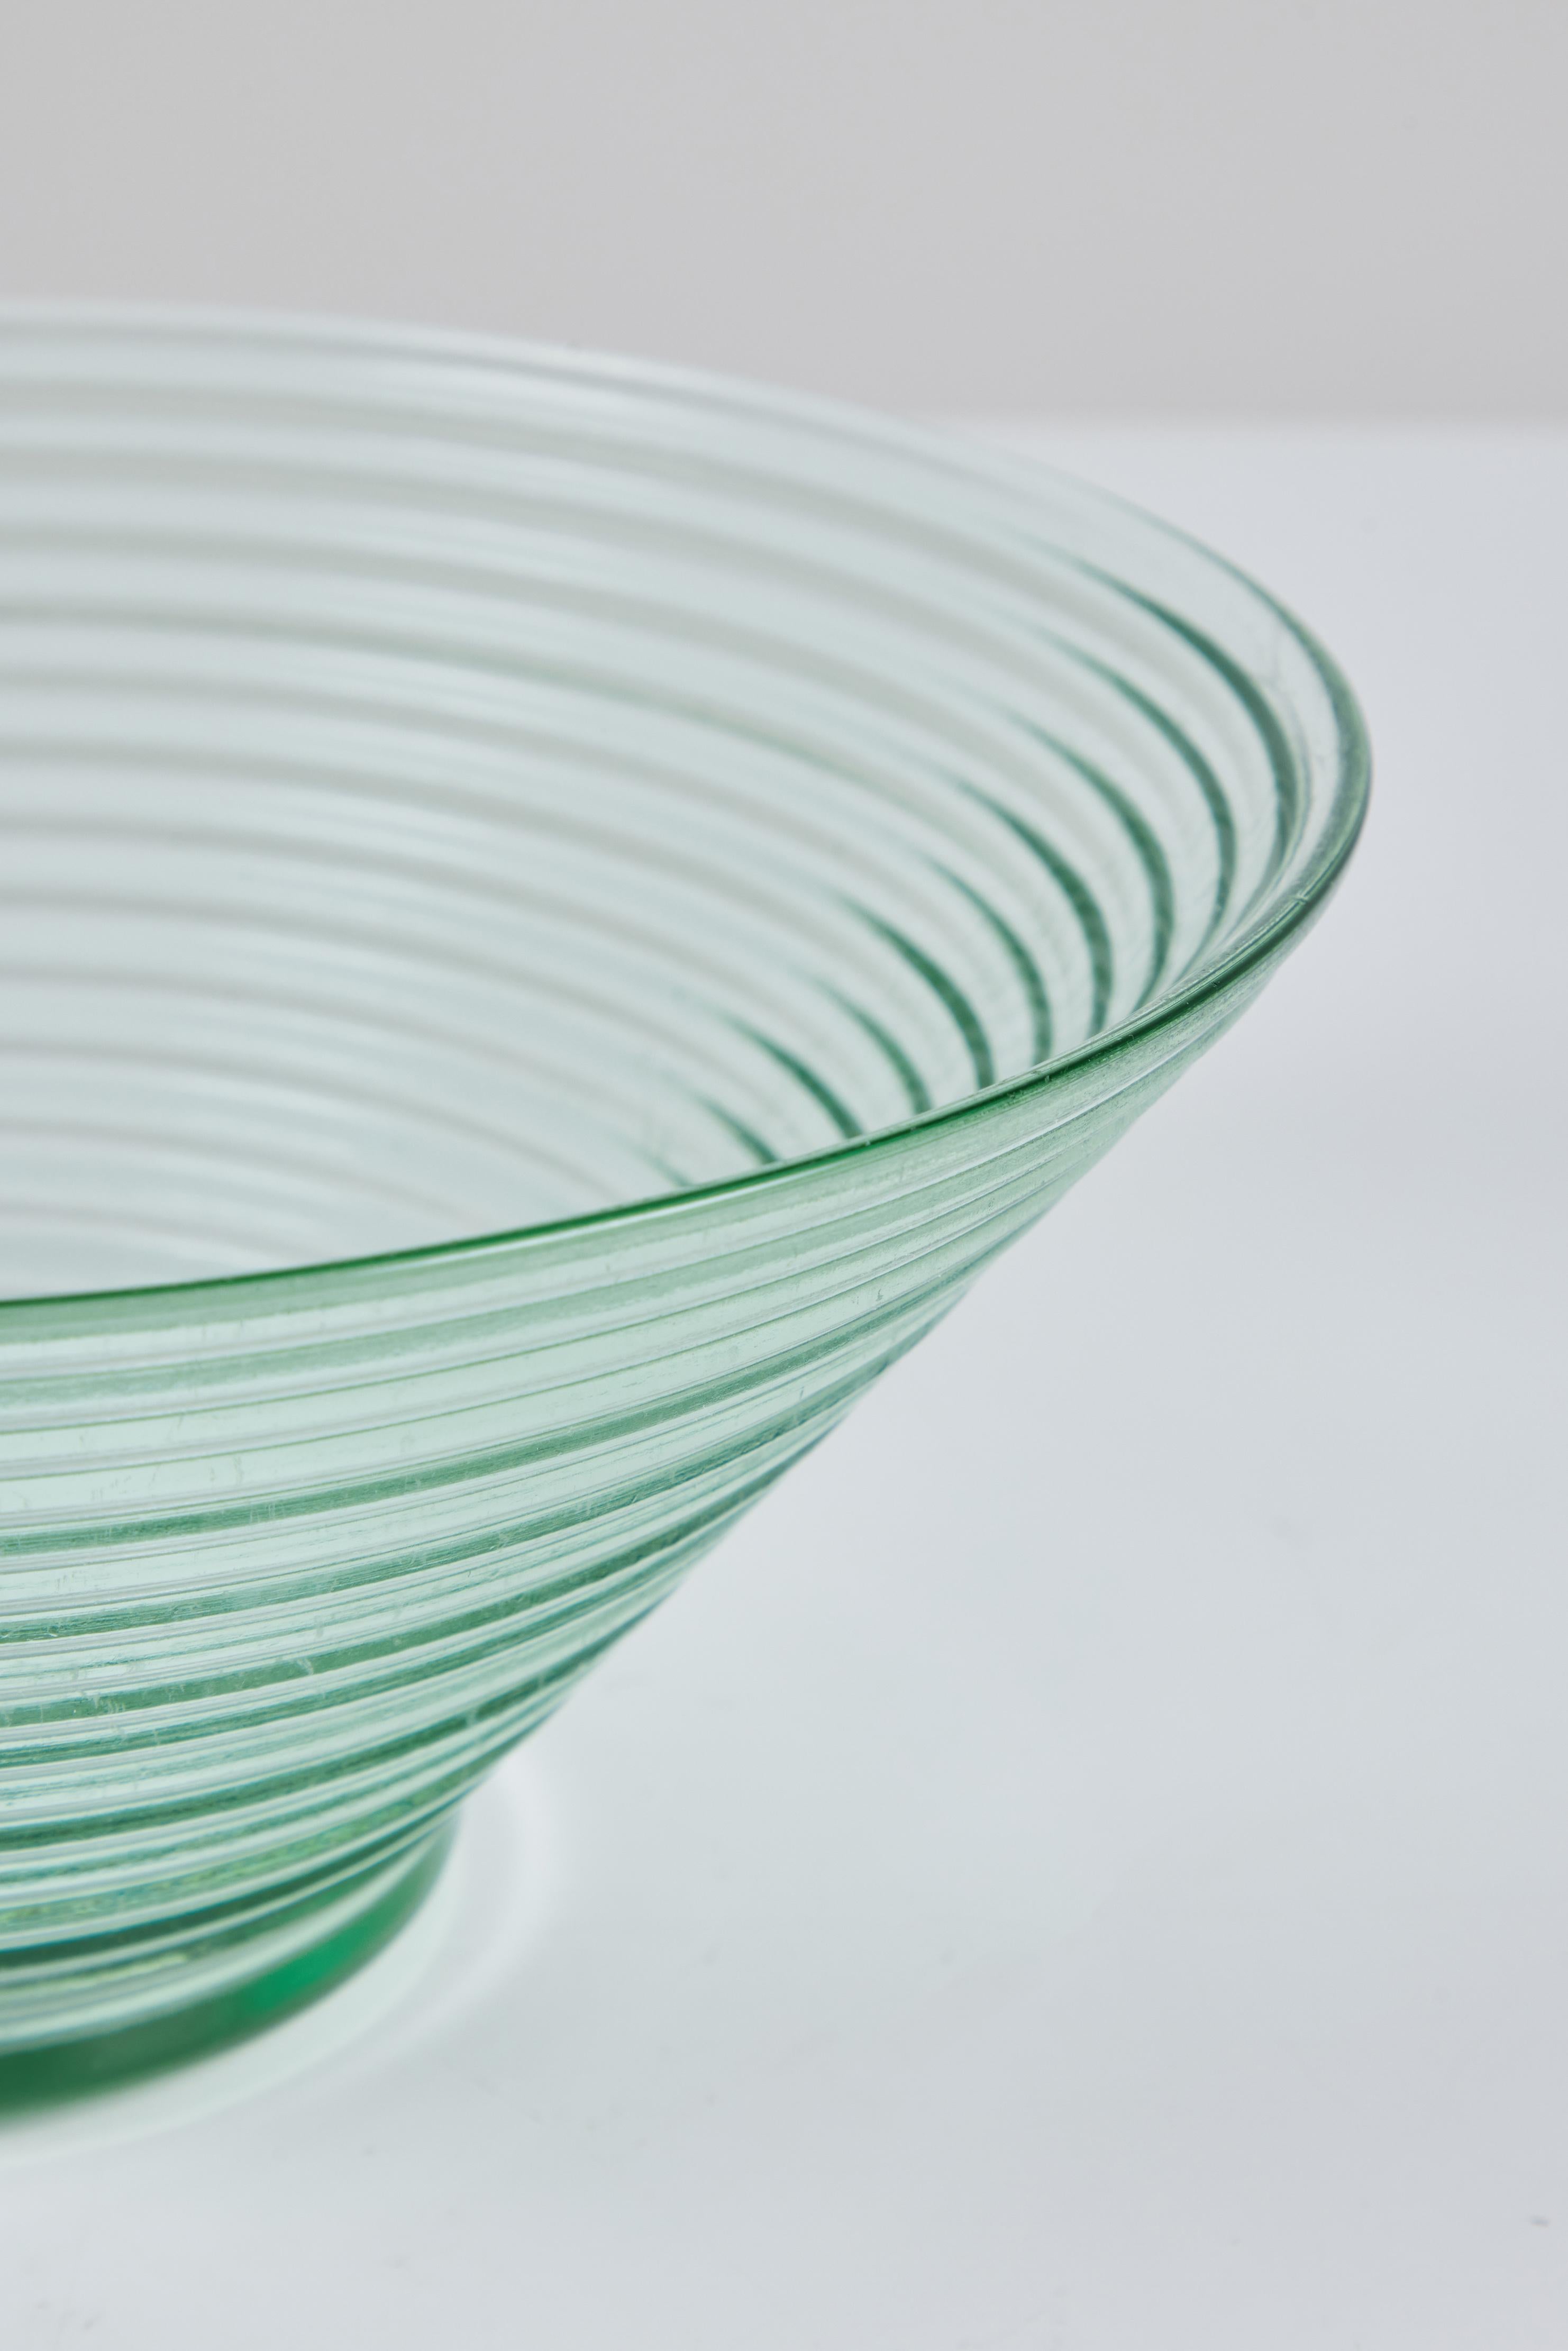 Aino Aalto Ribbed Glass Bowl for Iittala 1